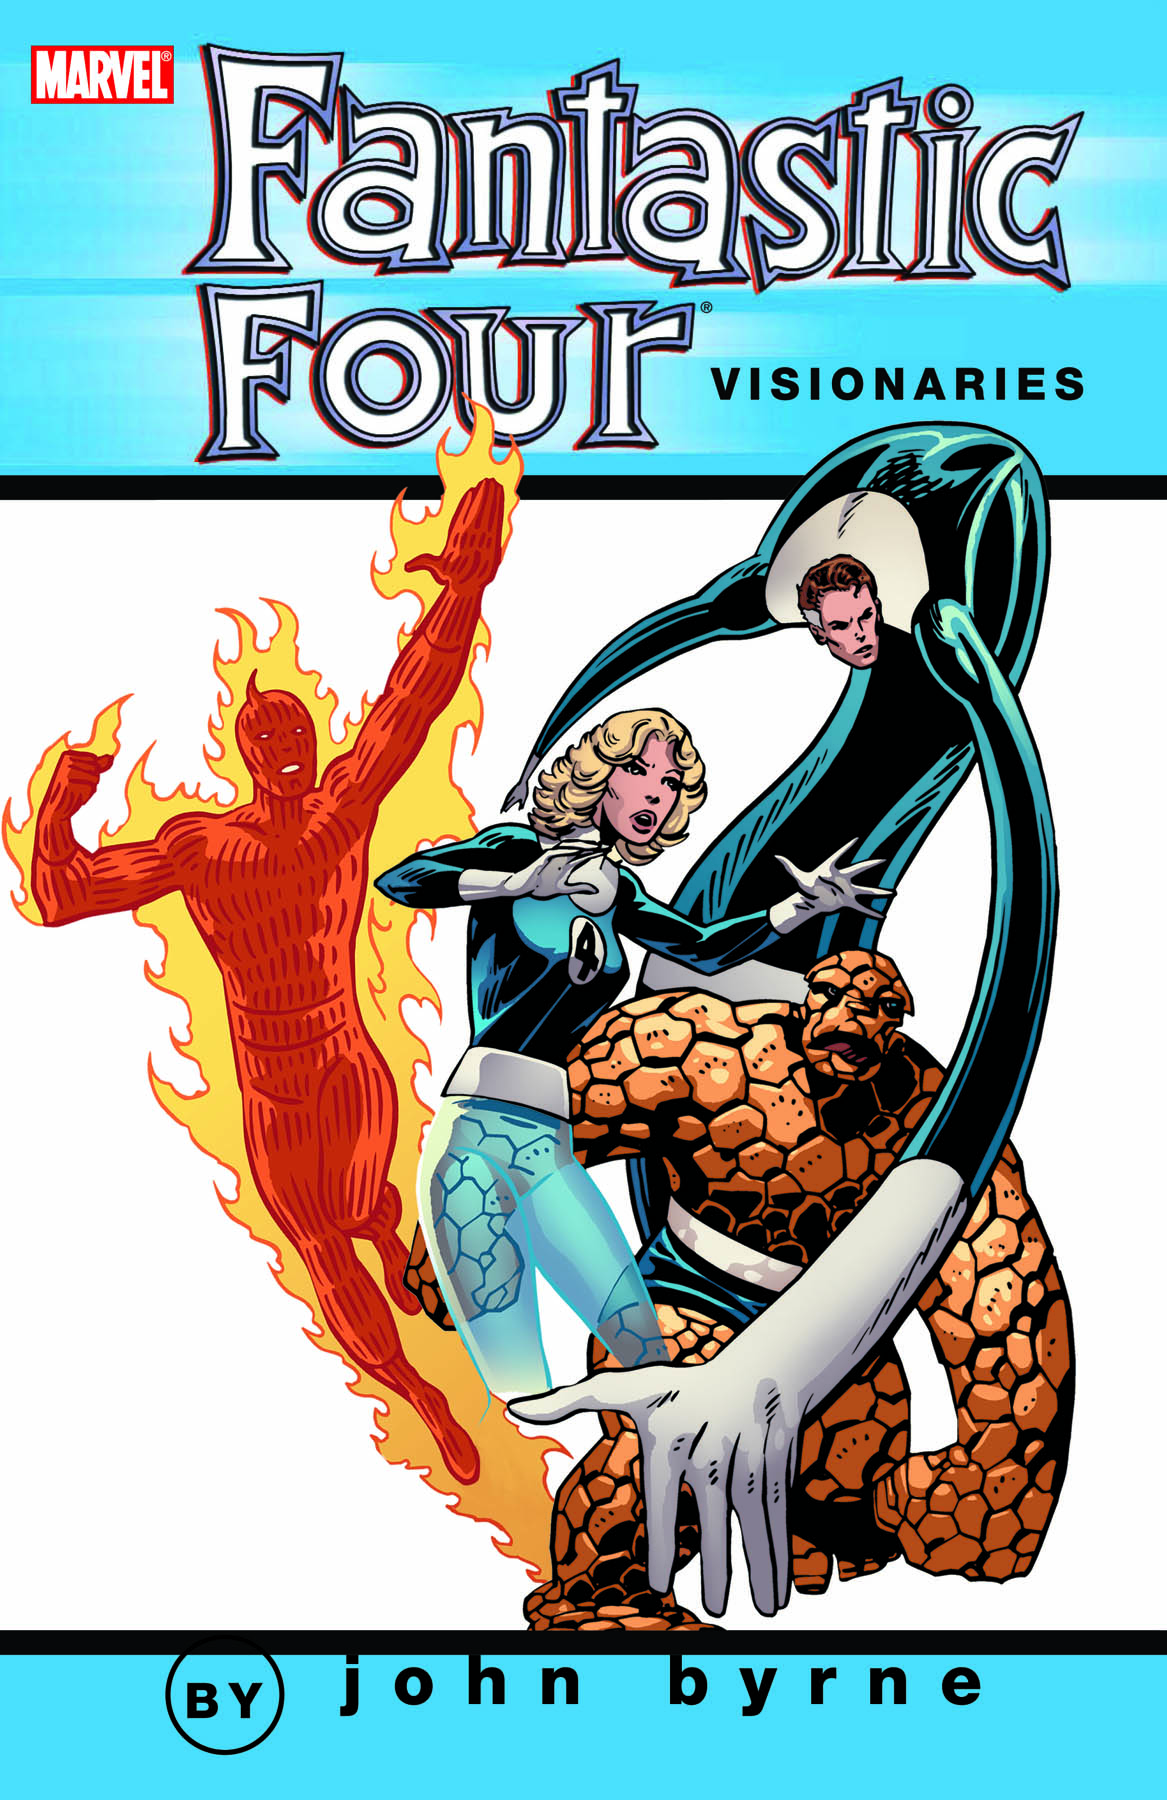 Fantastic Four Visionaries: John Byrne Vol. 3 (Trade Paperback)